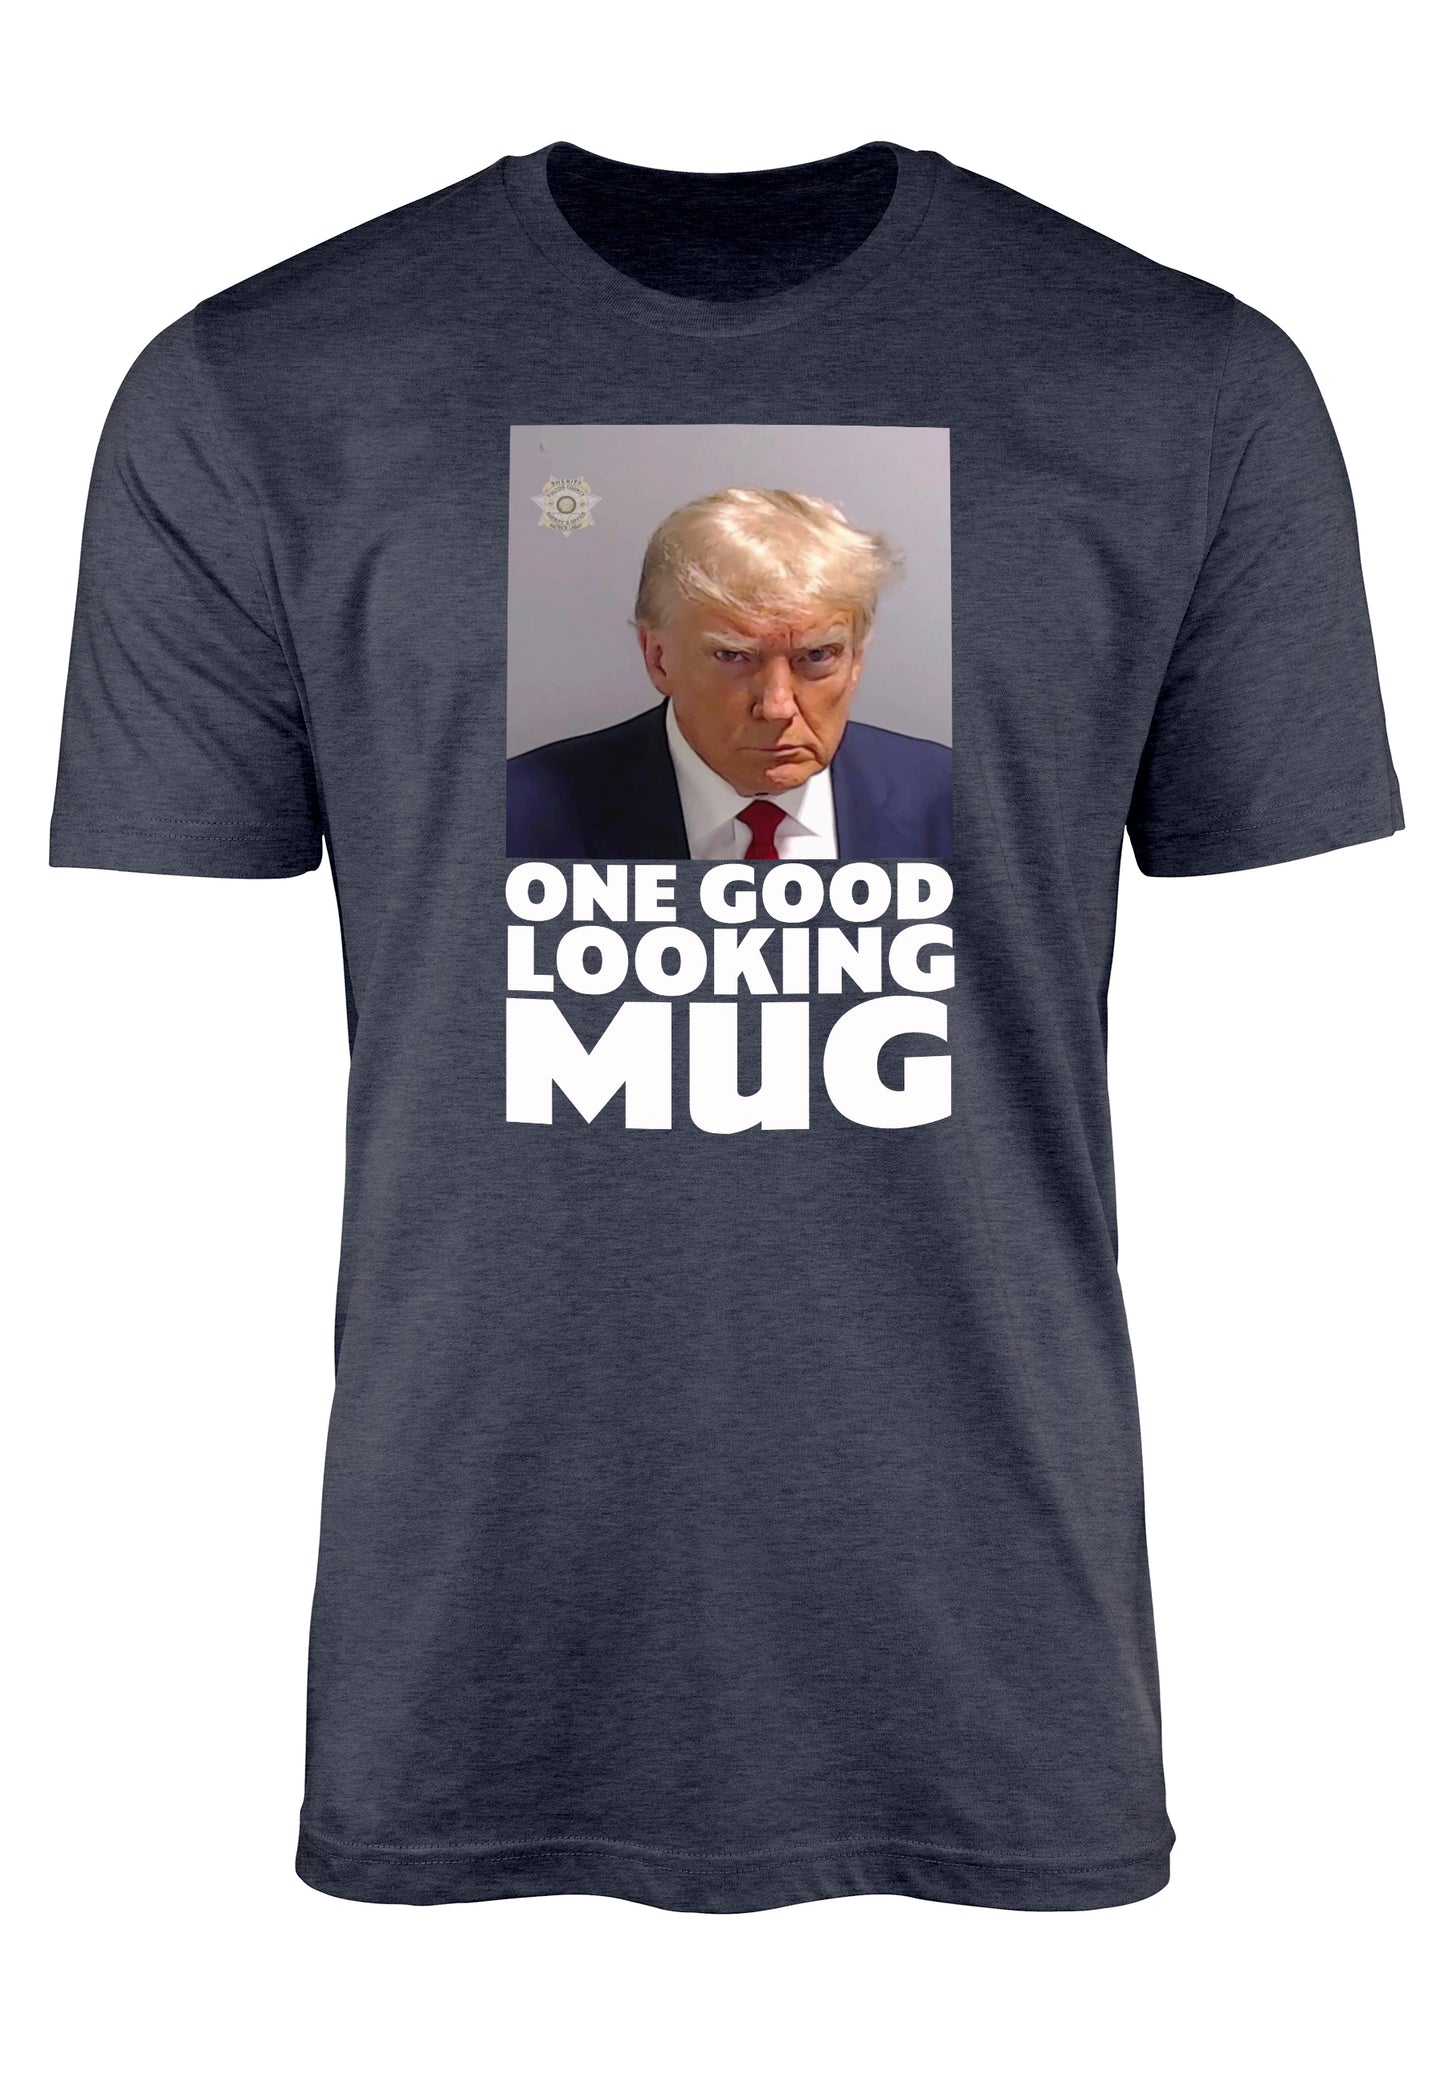 Trump mugshot t-shirt on cotton/poly blend tee